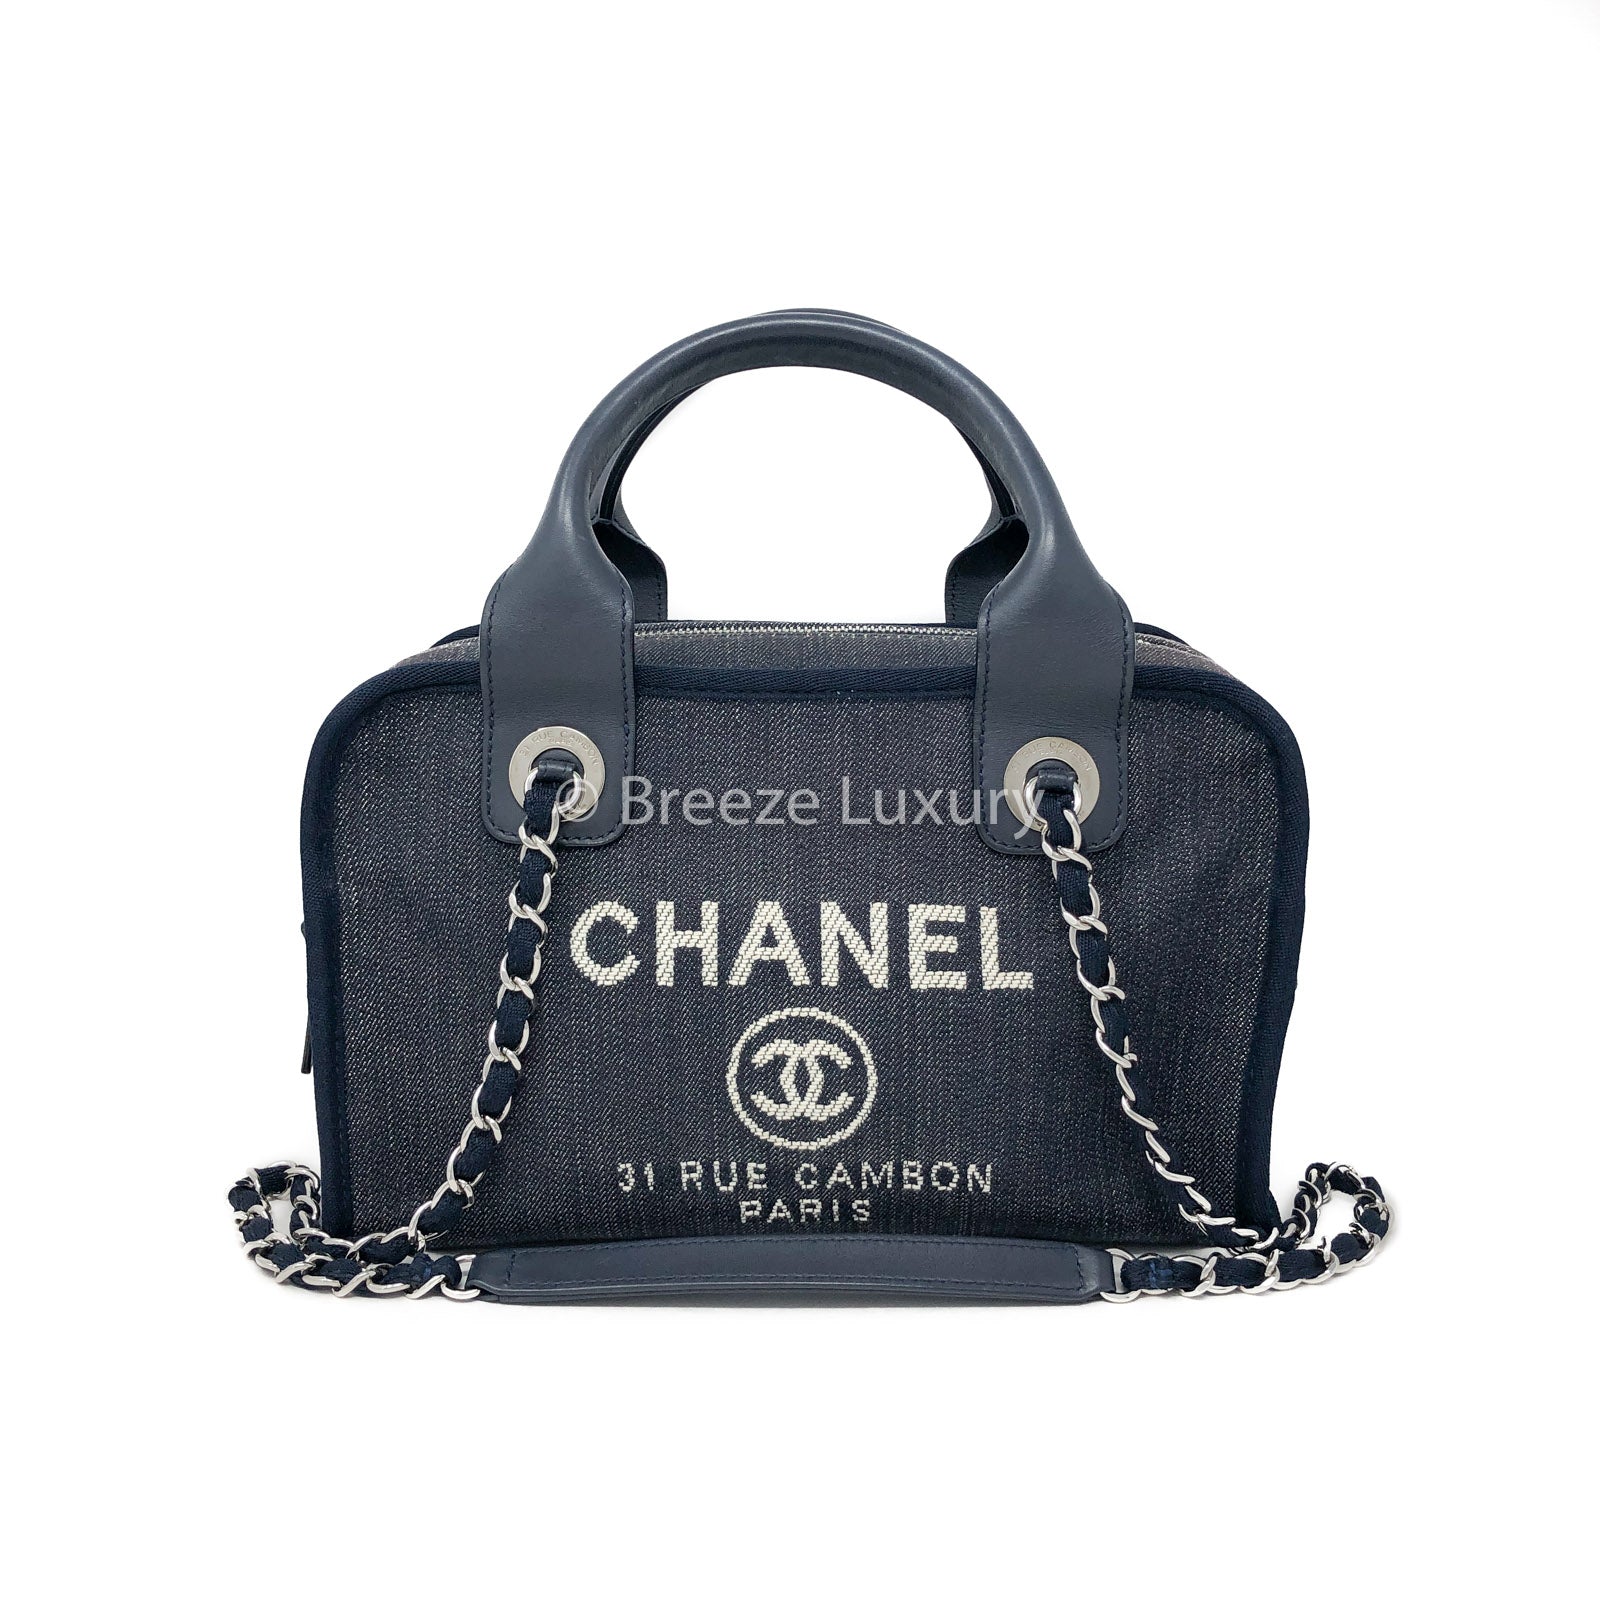 Chanel White Small Gabrielle Hobo Bag